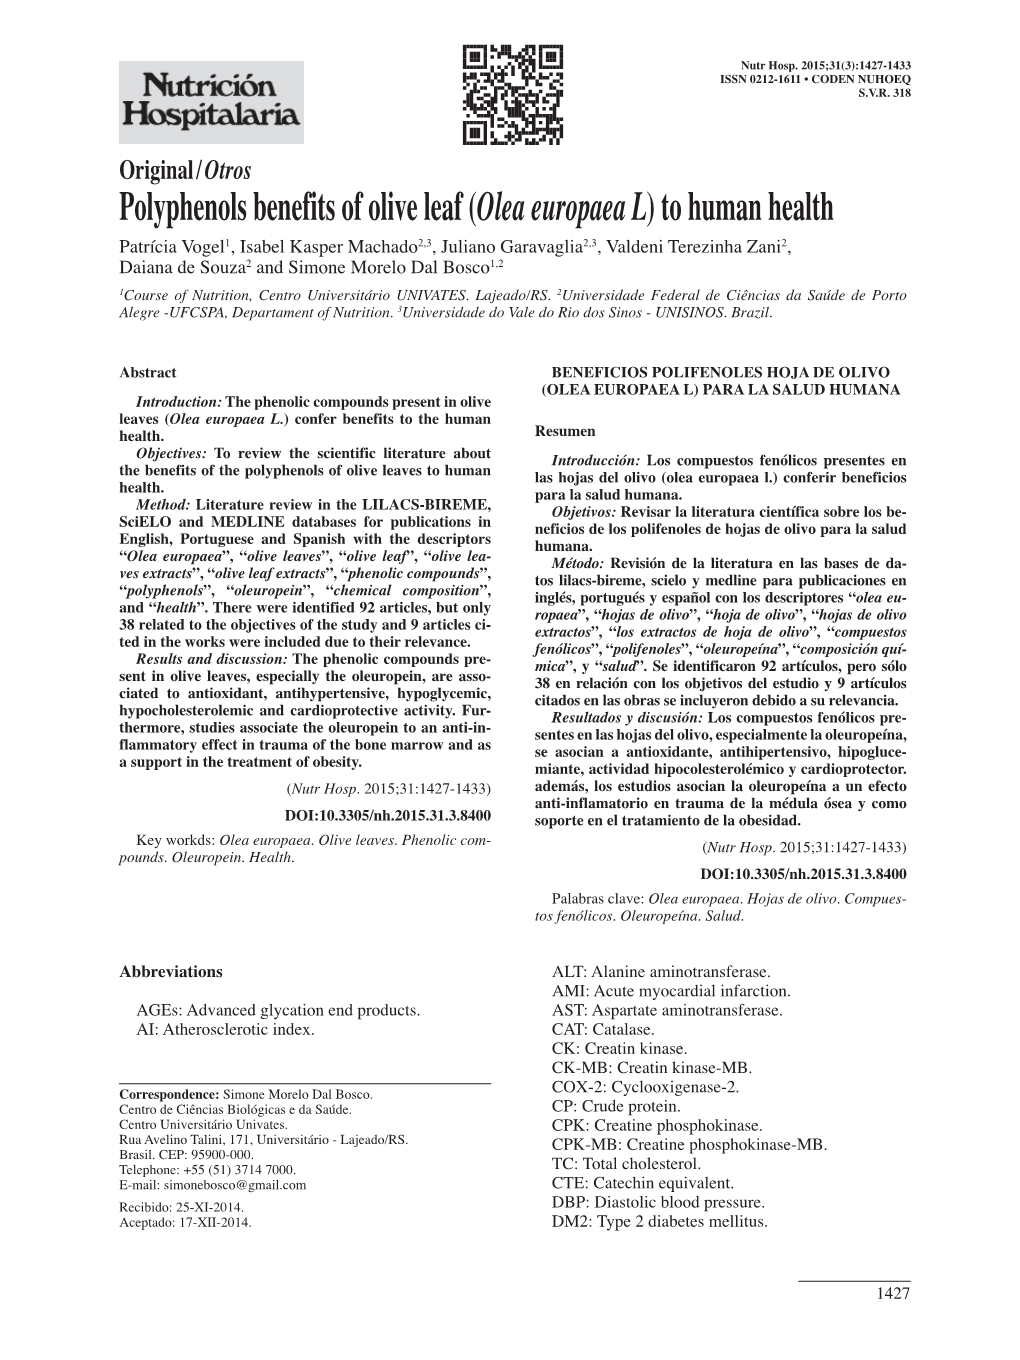 Polyphenols Benefits of Olive Leaf (Olea Europaea L) to Human Health